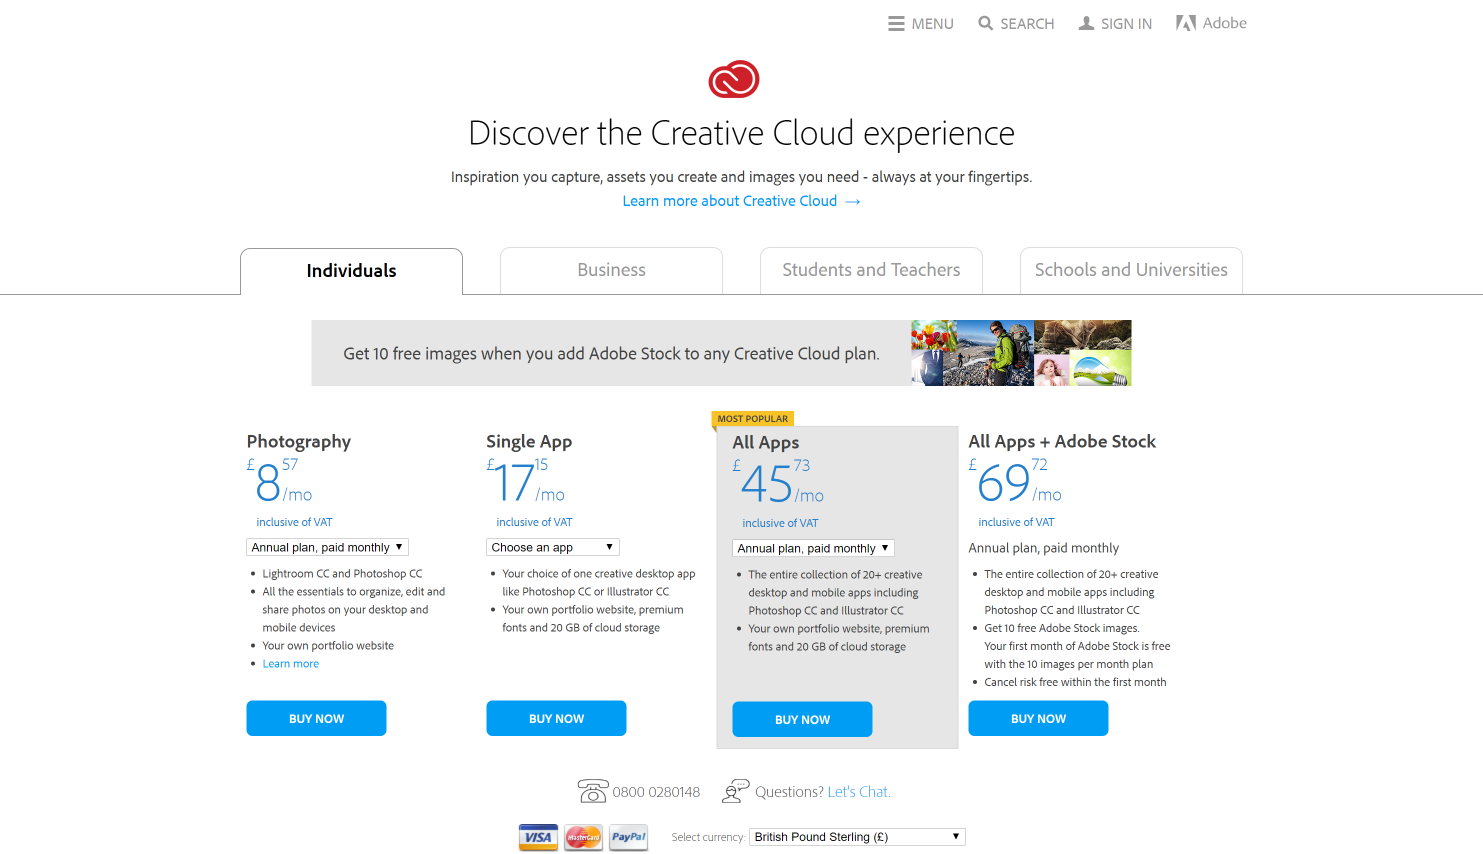 Adobe Creative Cloud Creative Cloud pricing and membership plans